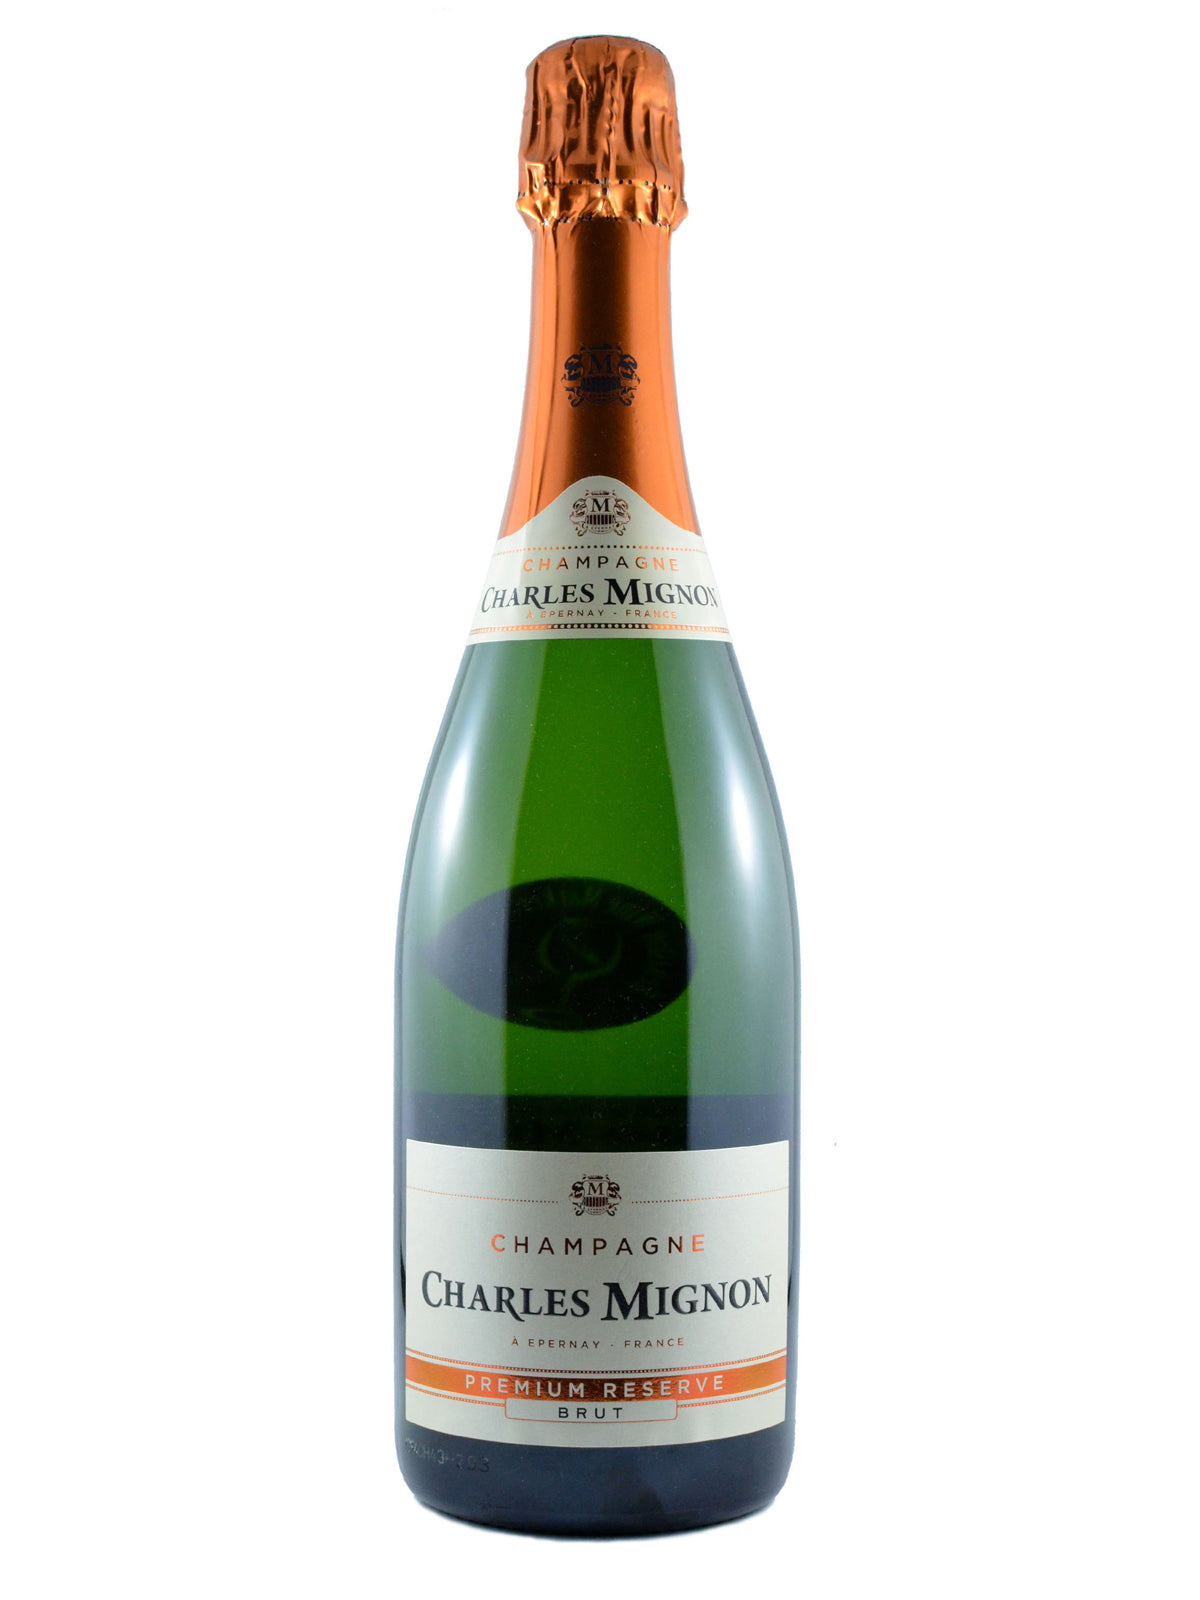 Charles Mignon, Premium Reserve Brut Champagne